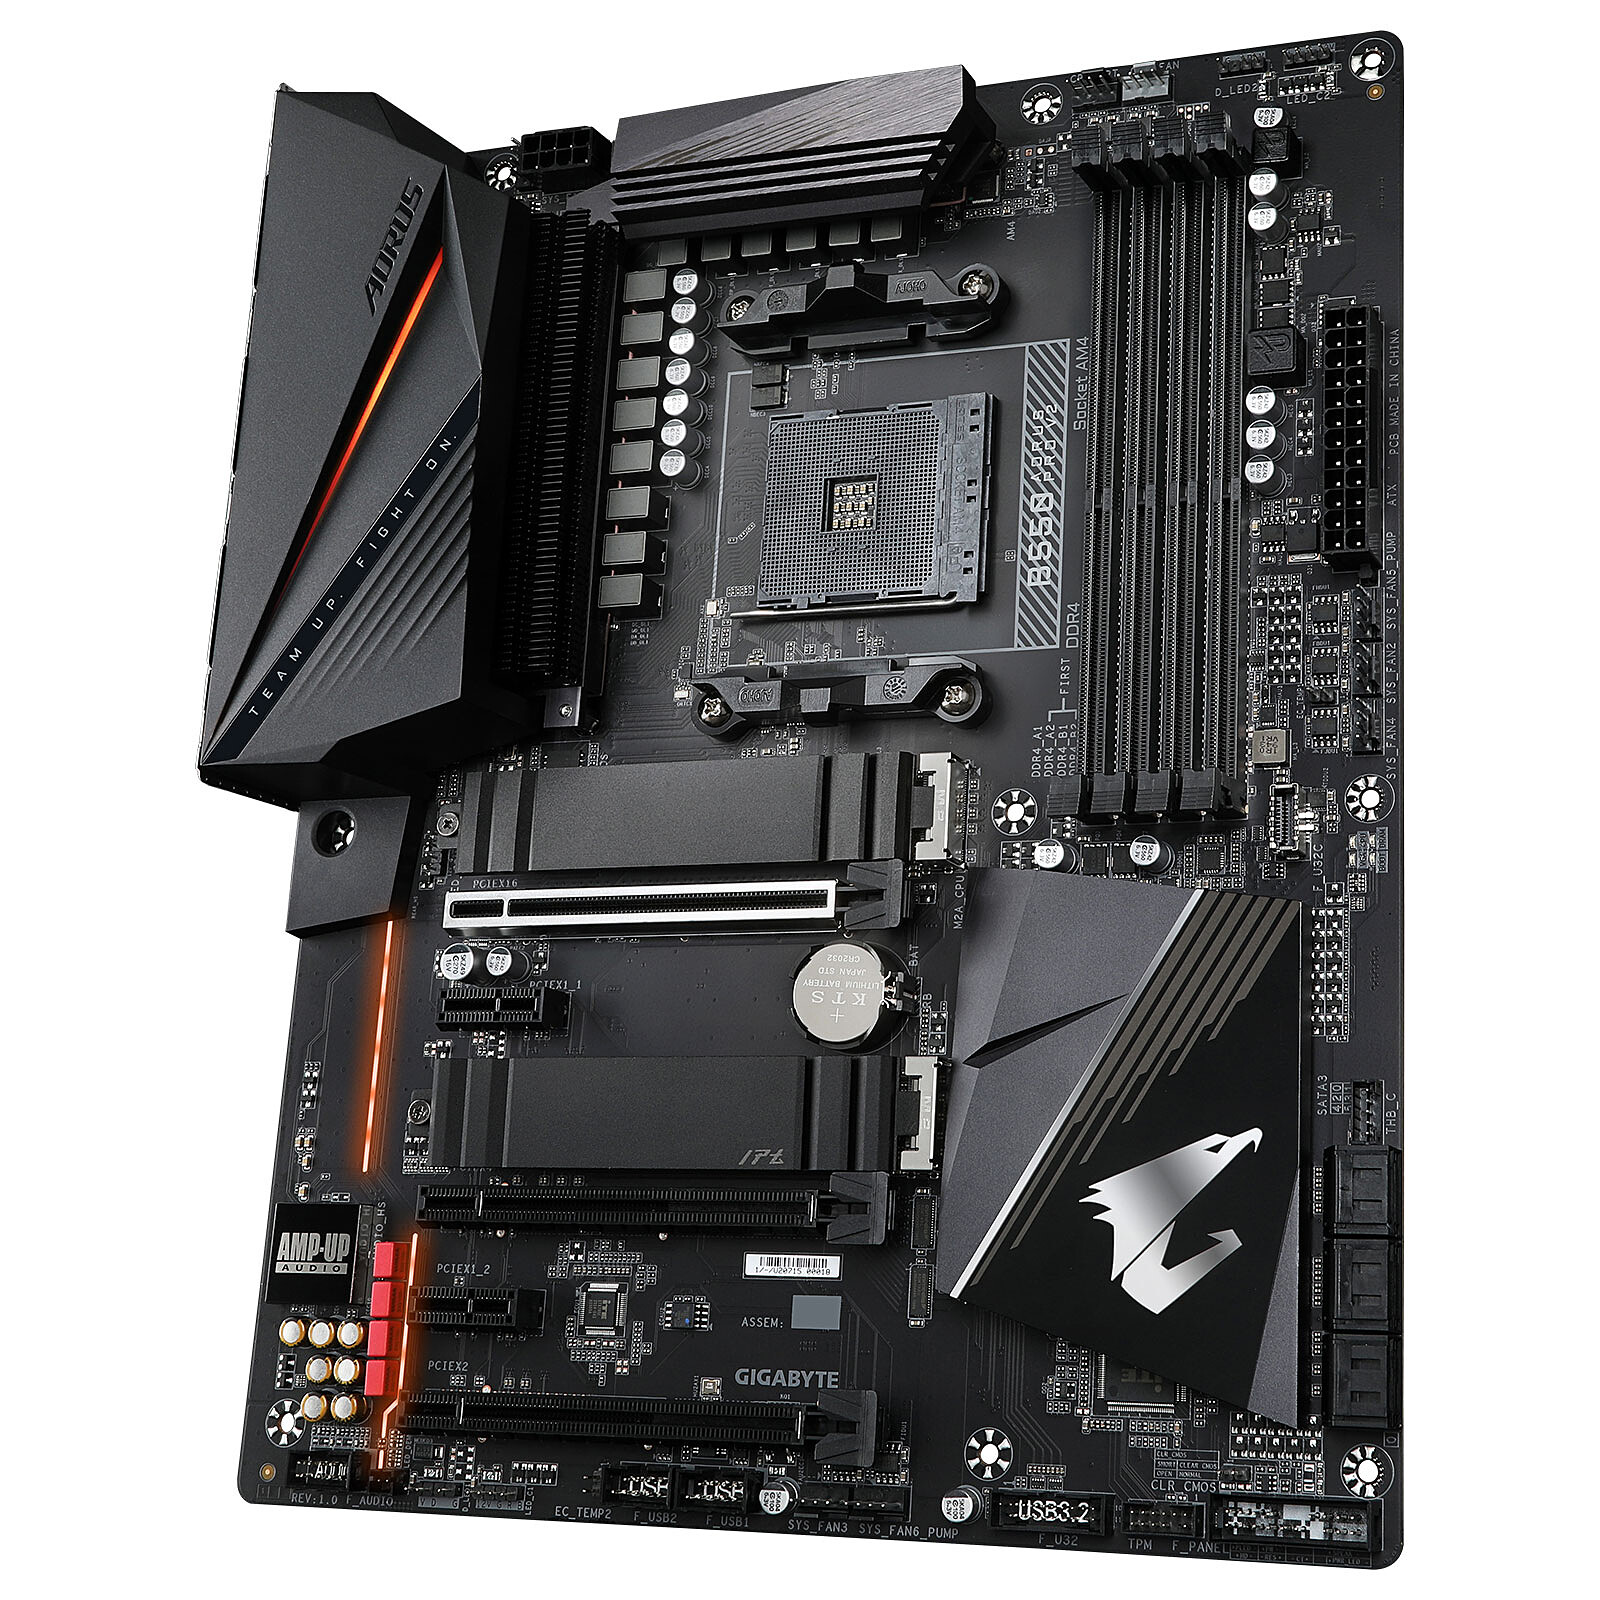 GIGABYTE B550 GAMING X V2 AM4 AMD B550 SATA 6Gb/s USB 3.0 ATX AMD  Motherboard